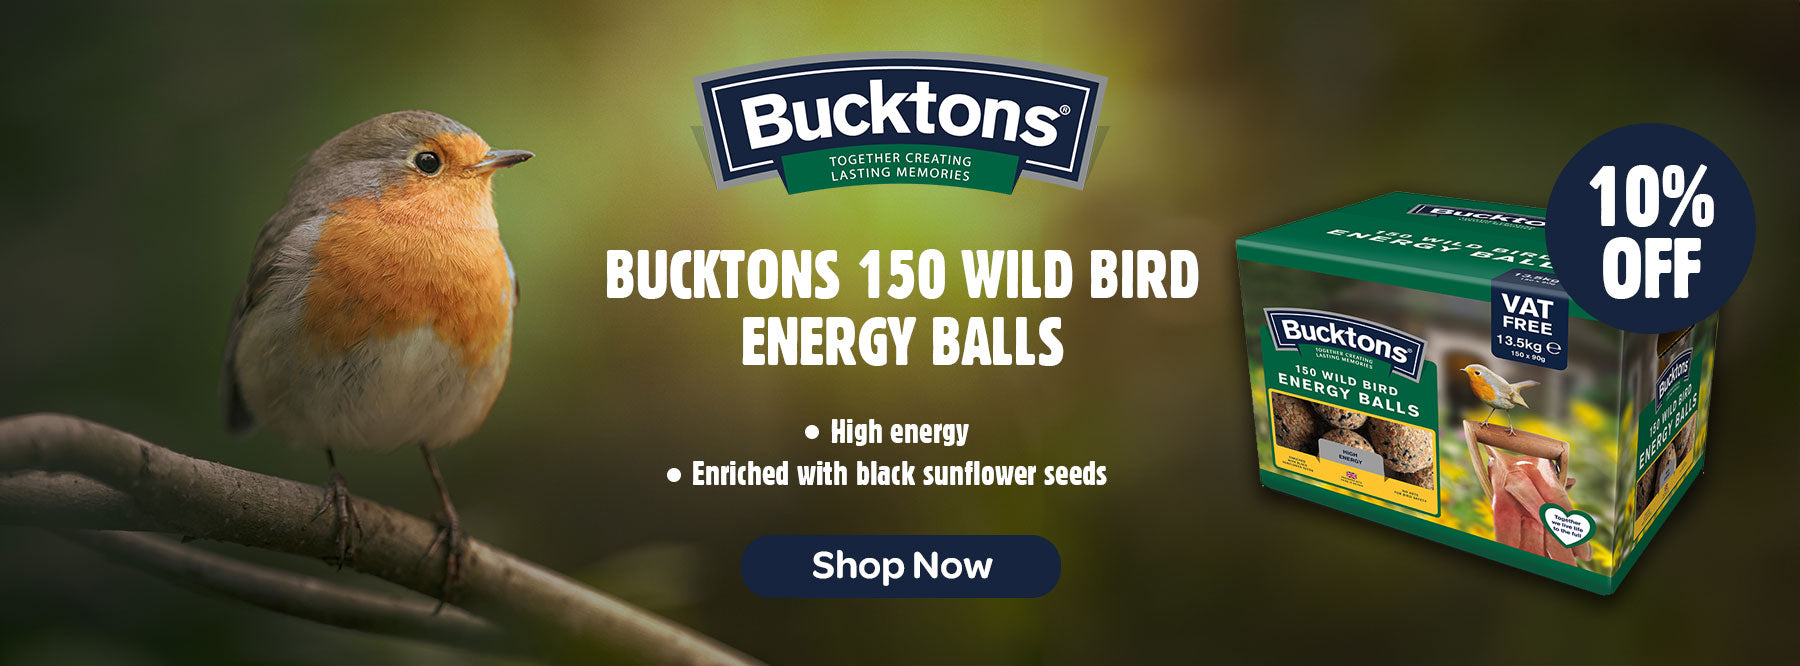 Savings On Bucktons Fat Balls